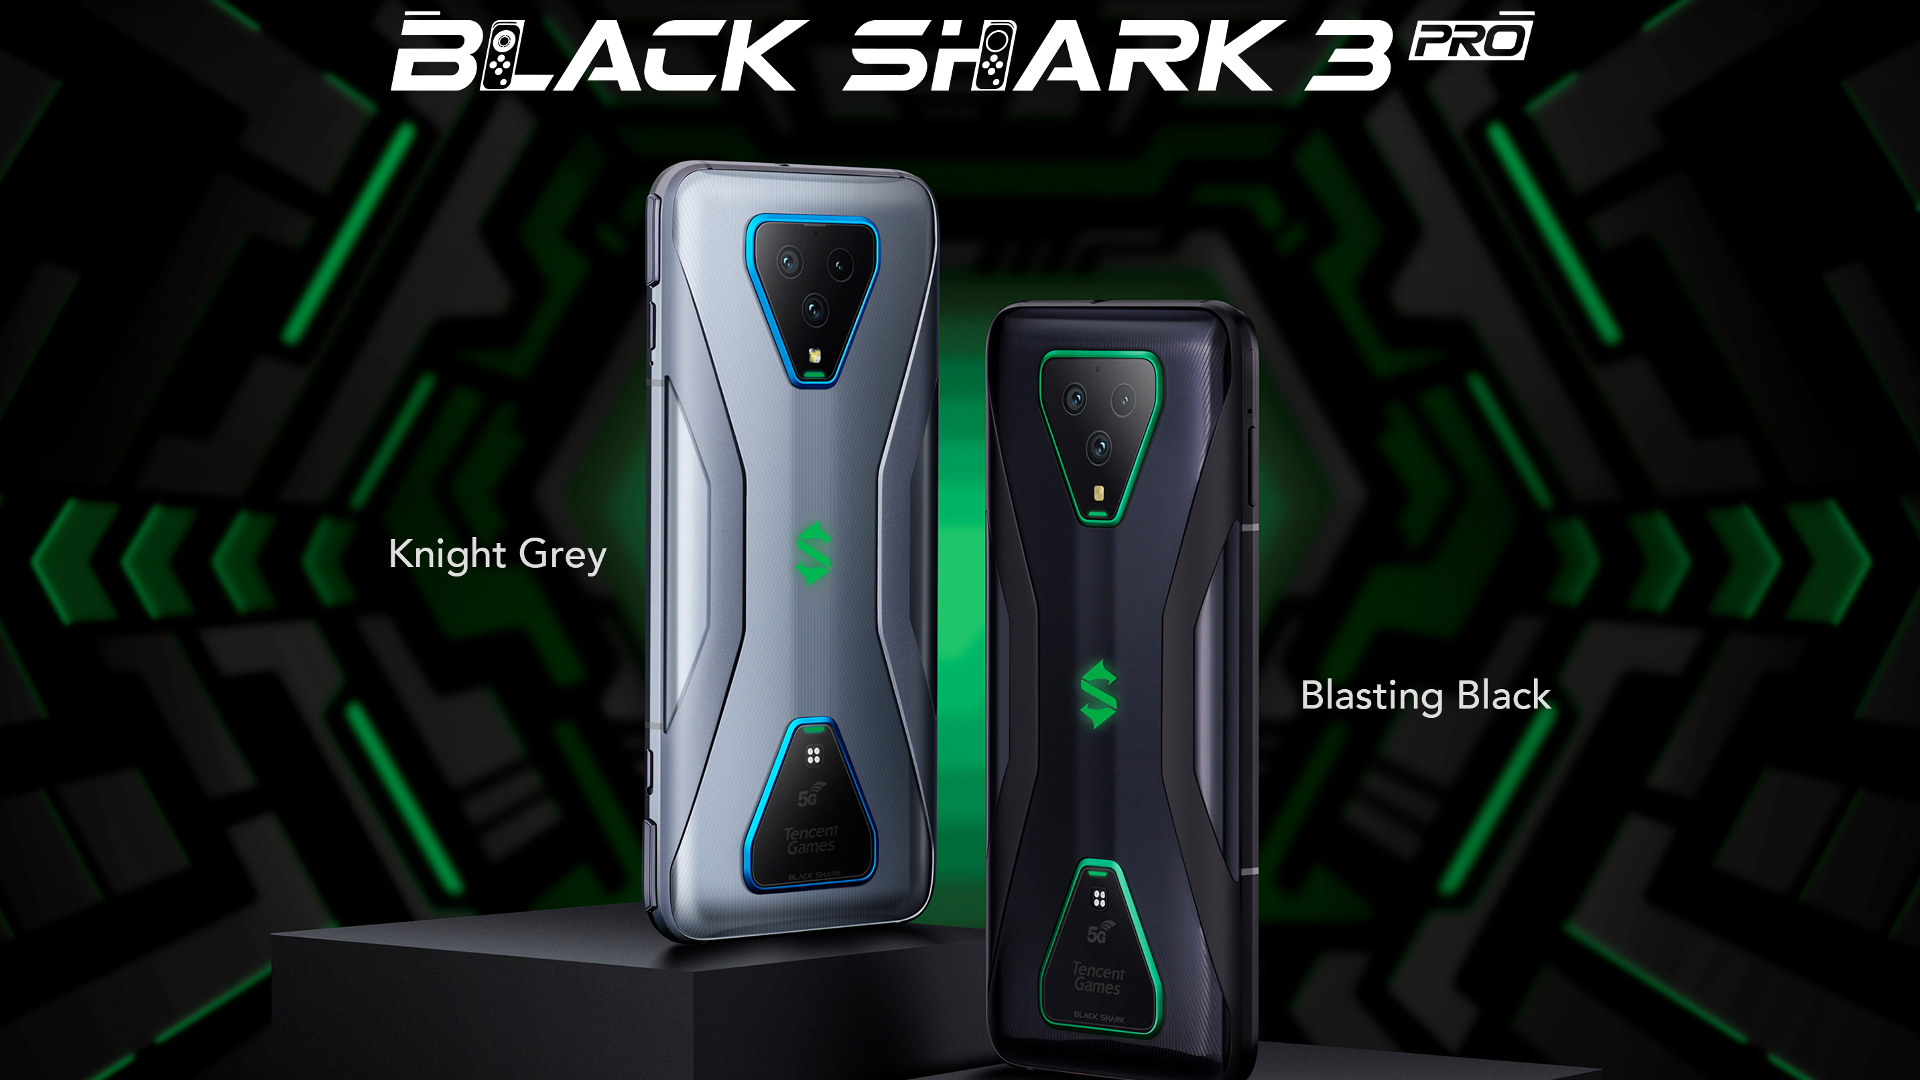 Black Shark 3 Pro models